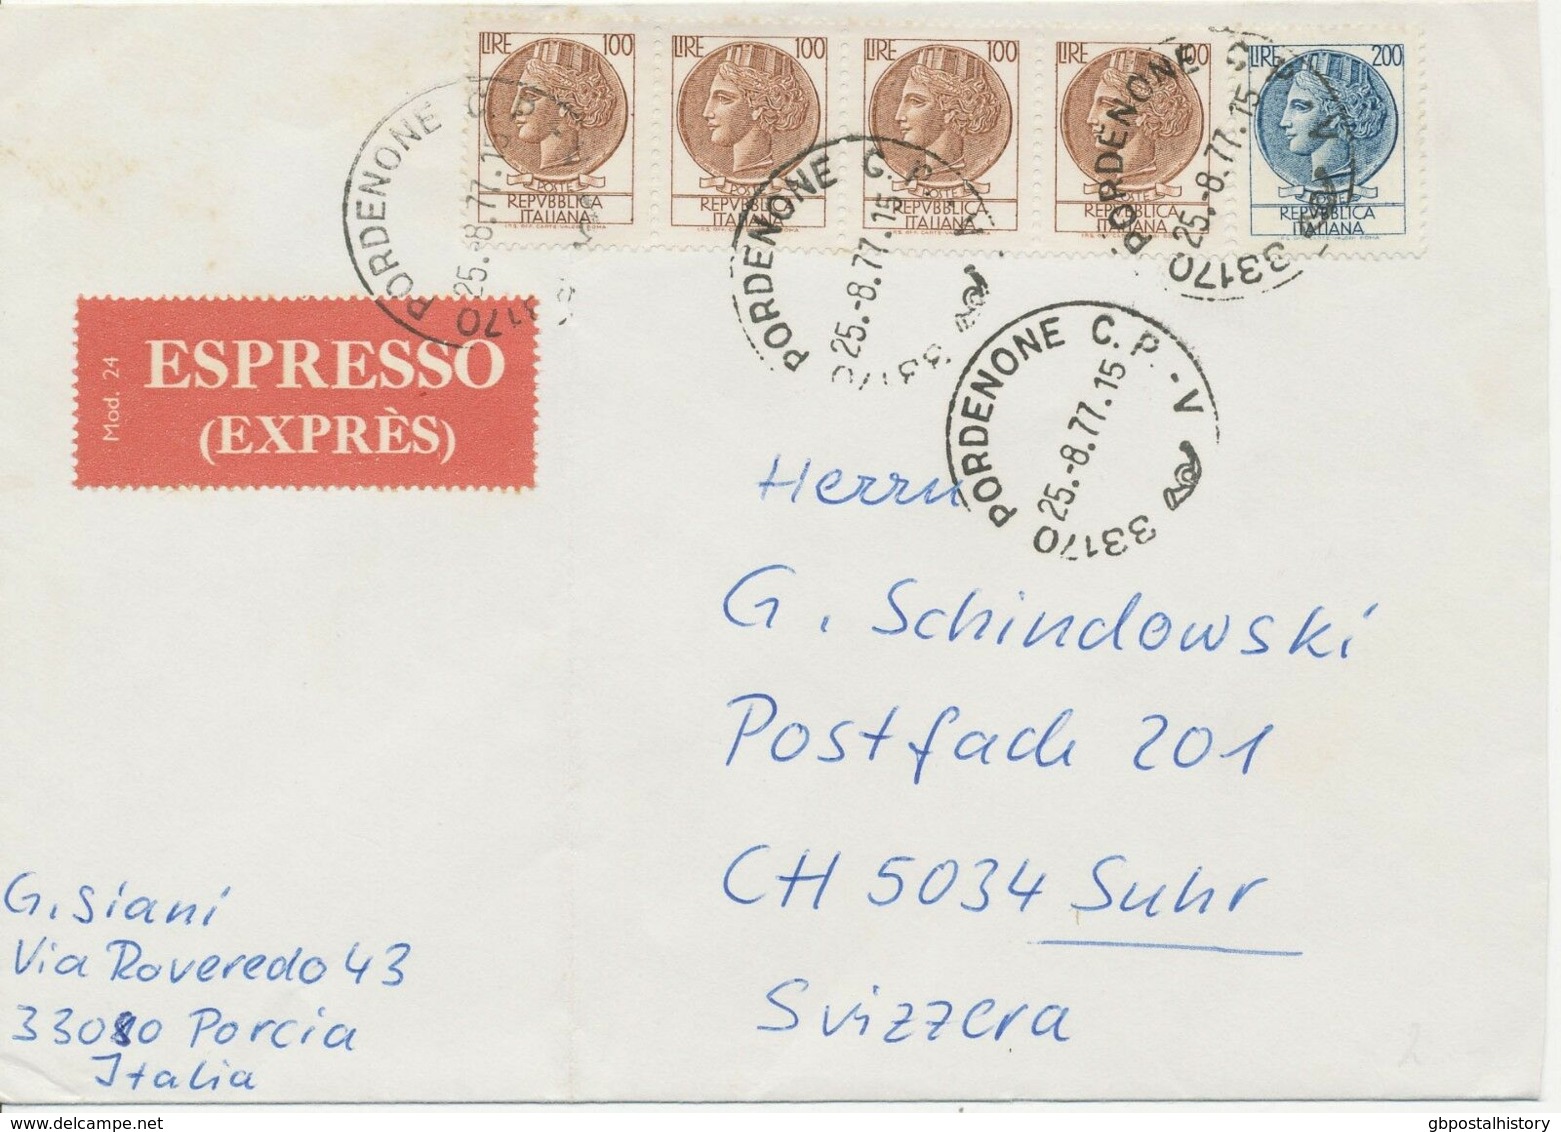 ITALY 1957/77 7 Different Superb ESPRESSO-covers (Express Covers) All Foreign - Correo Urgente/neumático